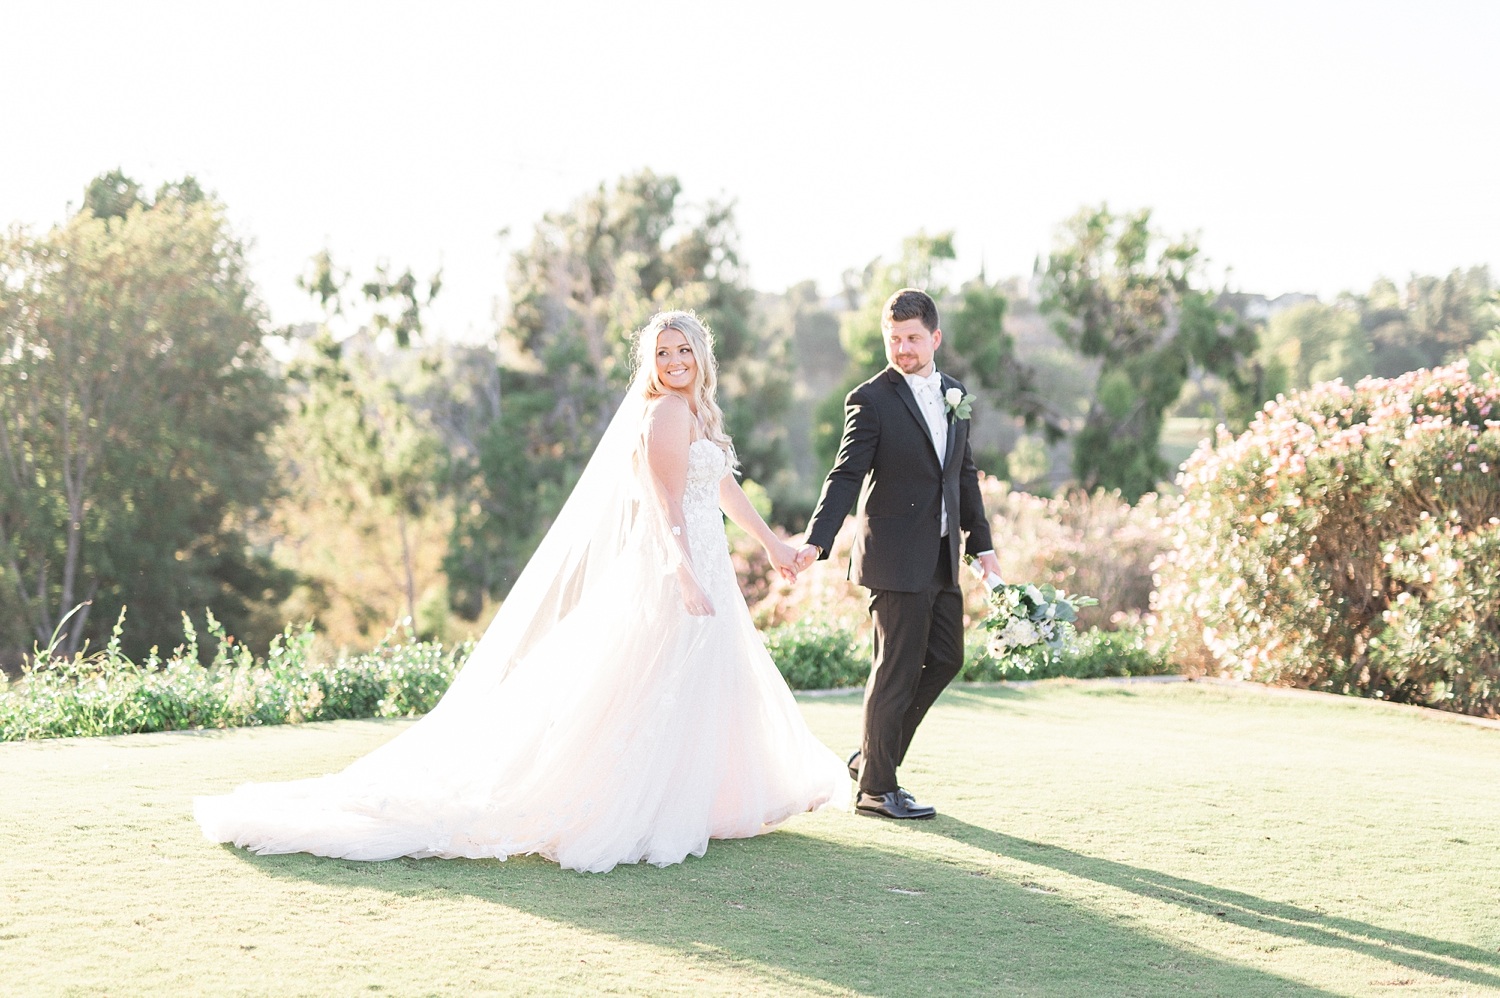 Anaheim Hills Golf Course Clubhouse Wedding | Spring | Luxury | Nataly Hernandez Photography-132.jpg